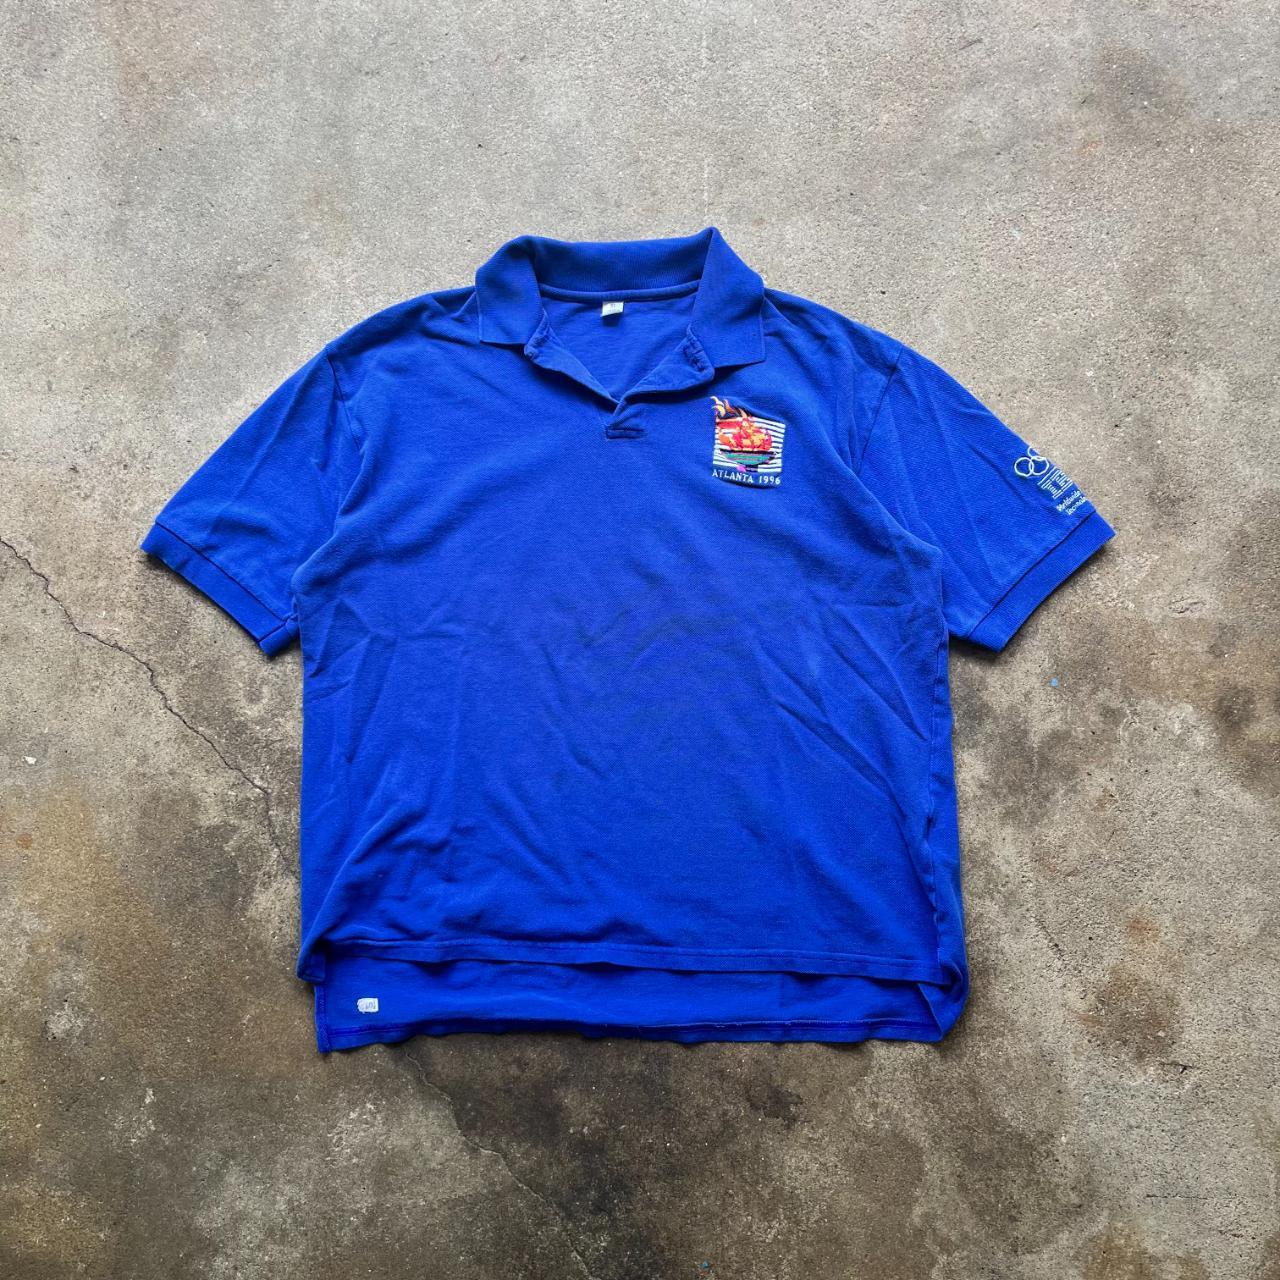 Vintage 1996 Atlanta Olympics Polo [XL]